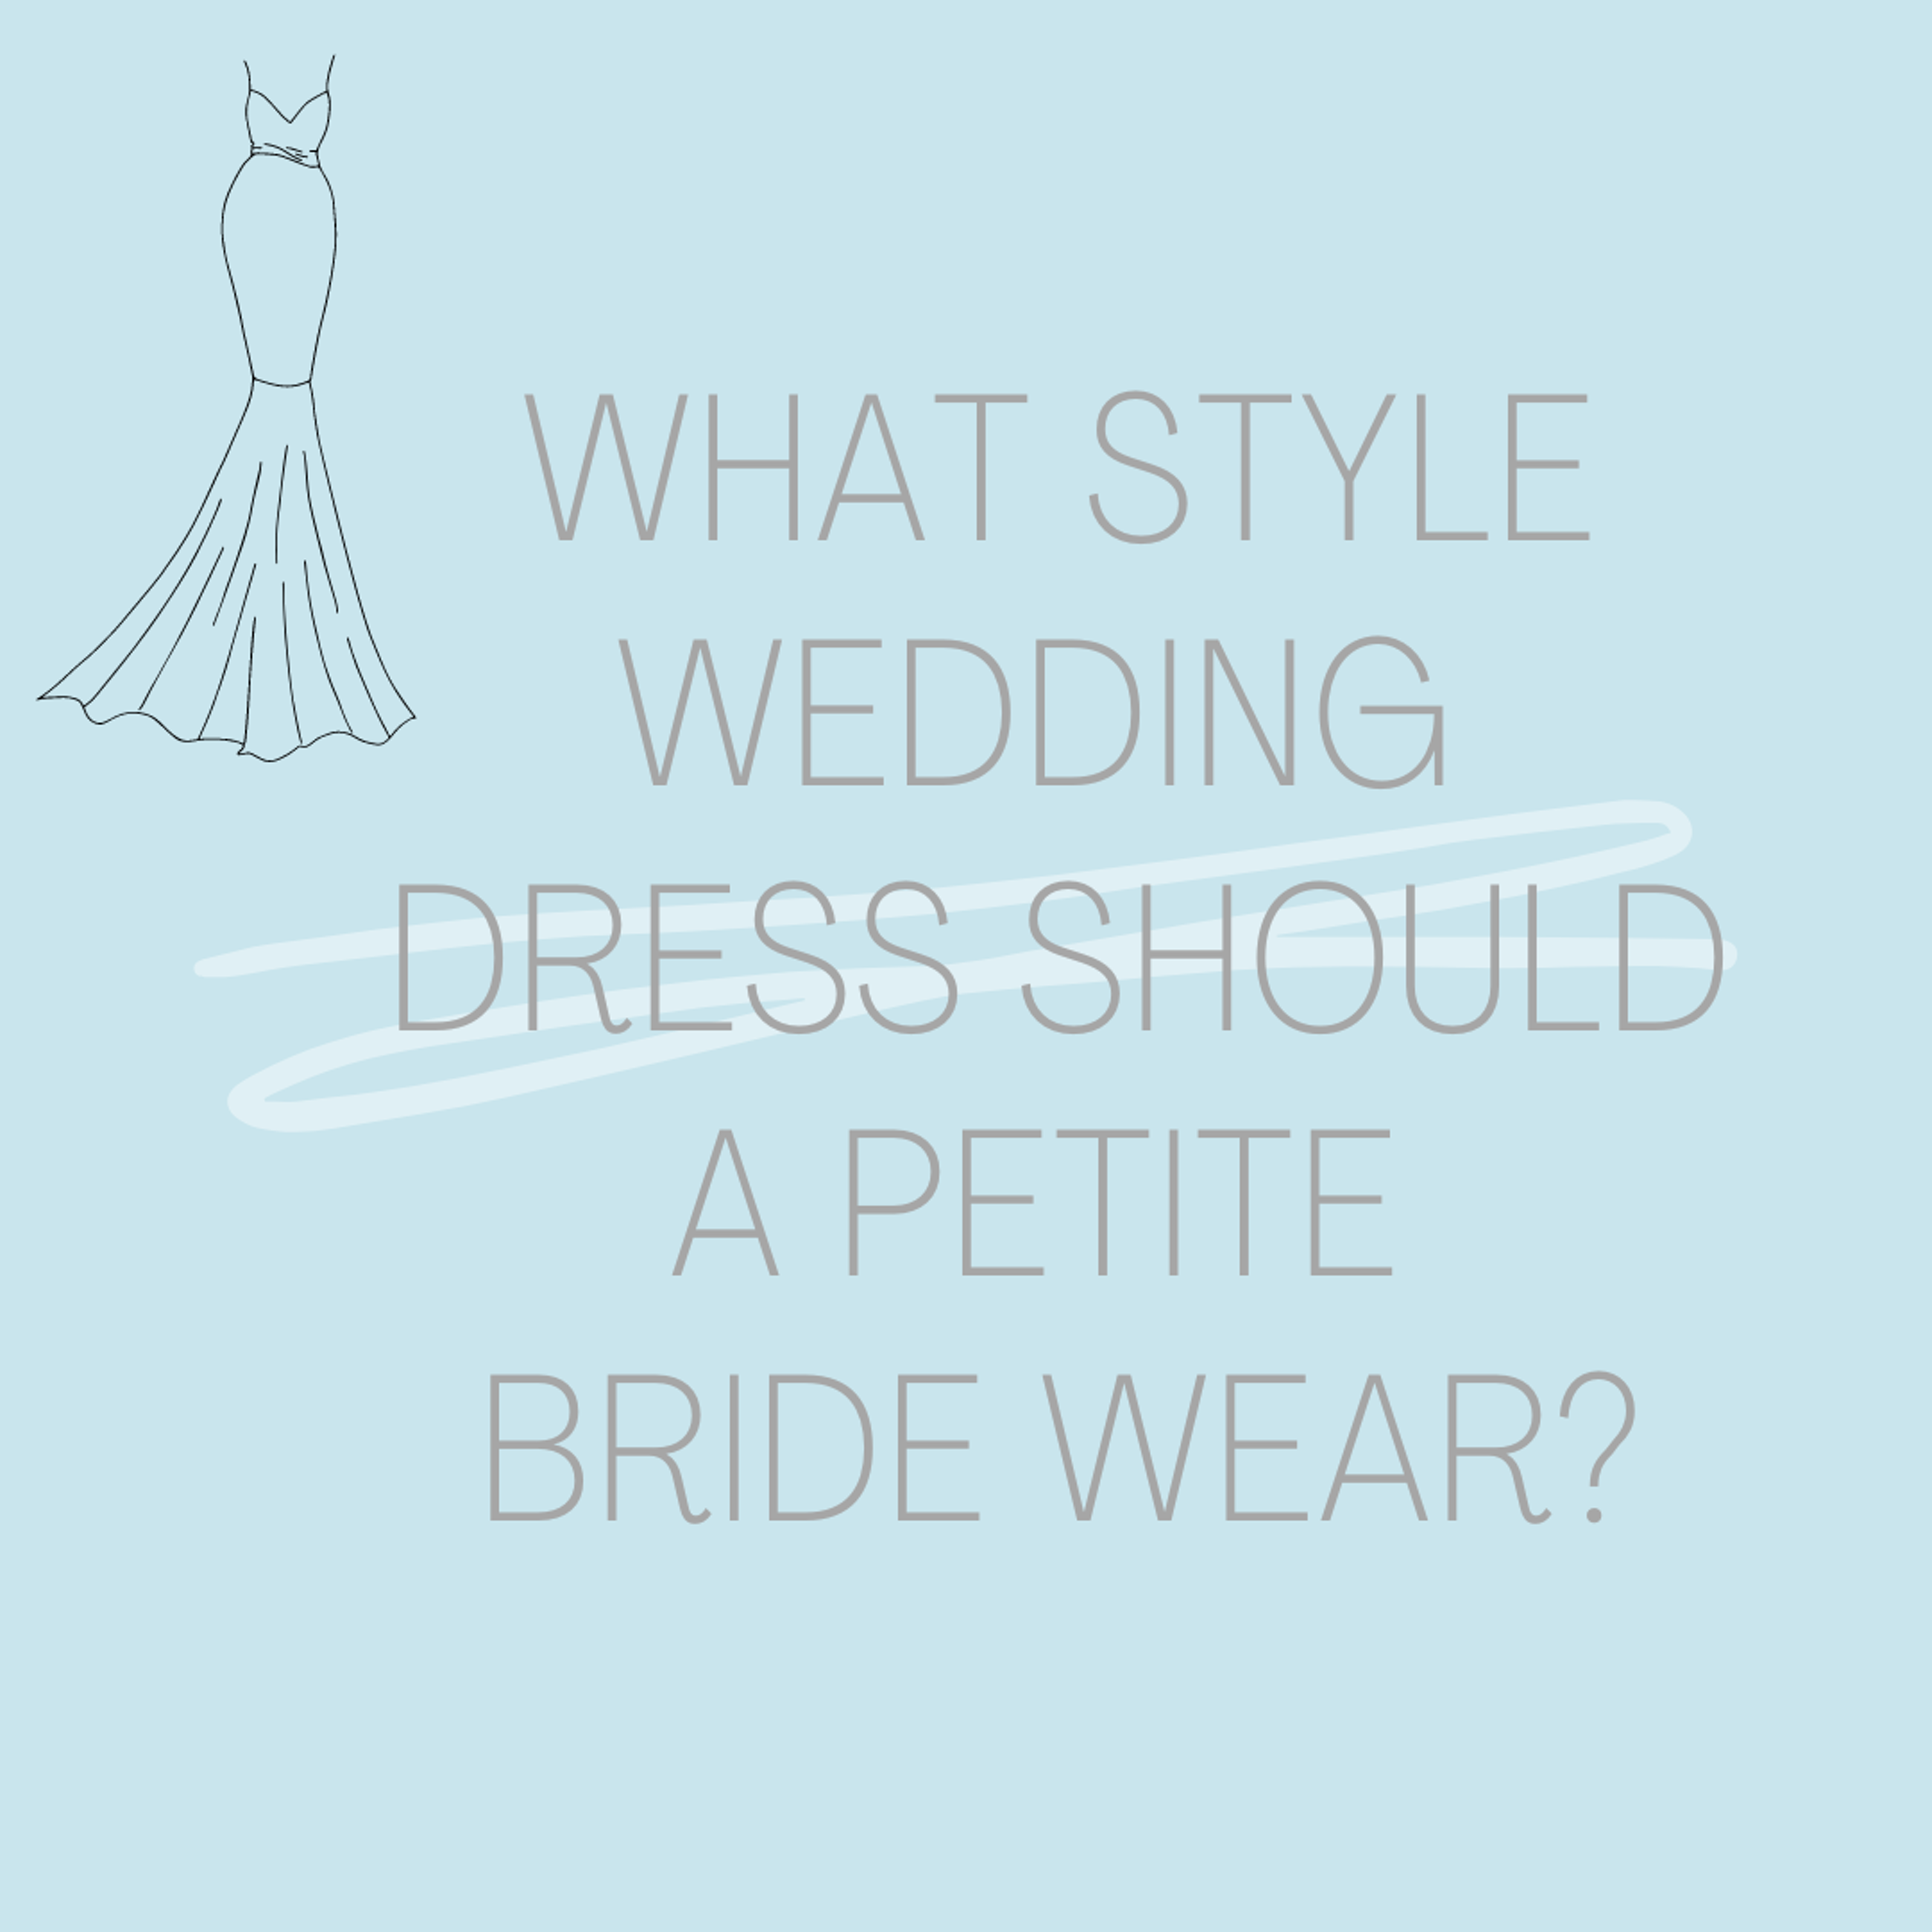 What Style Wedding Dress Should A Petite Bride Wear